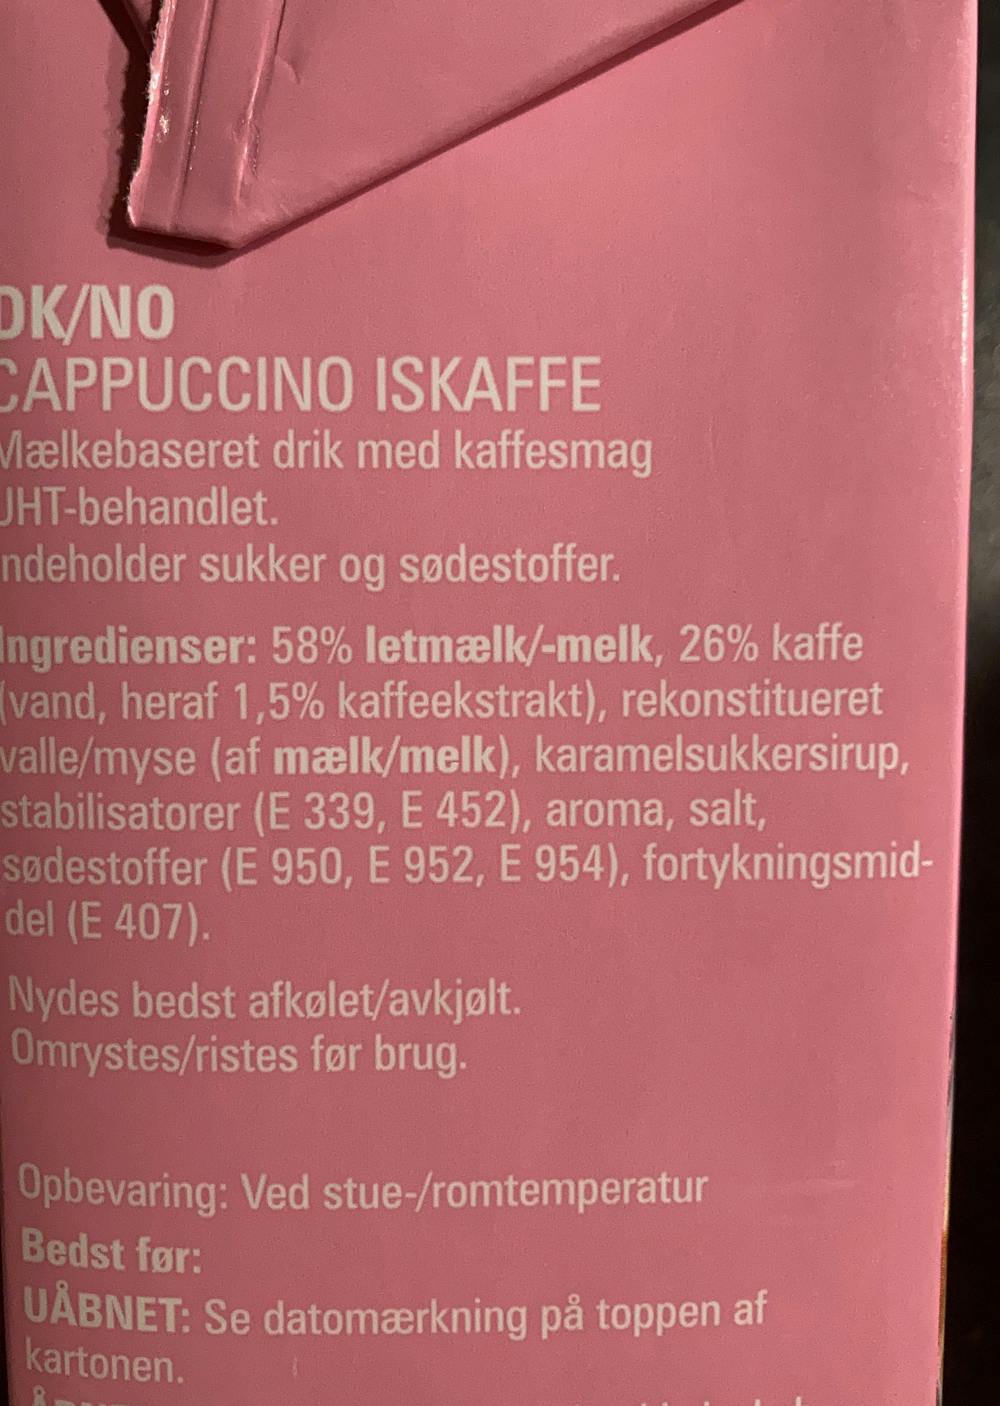 Ingredienslisten til Cappuccino iskaffe, Geia Food